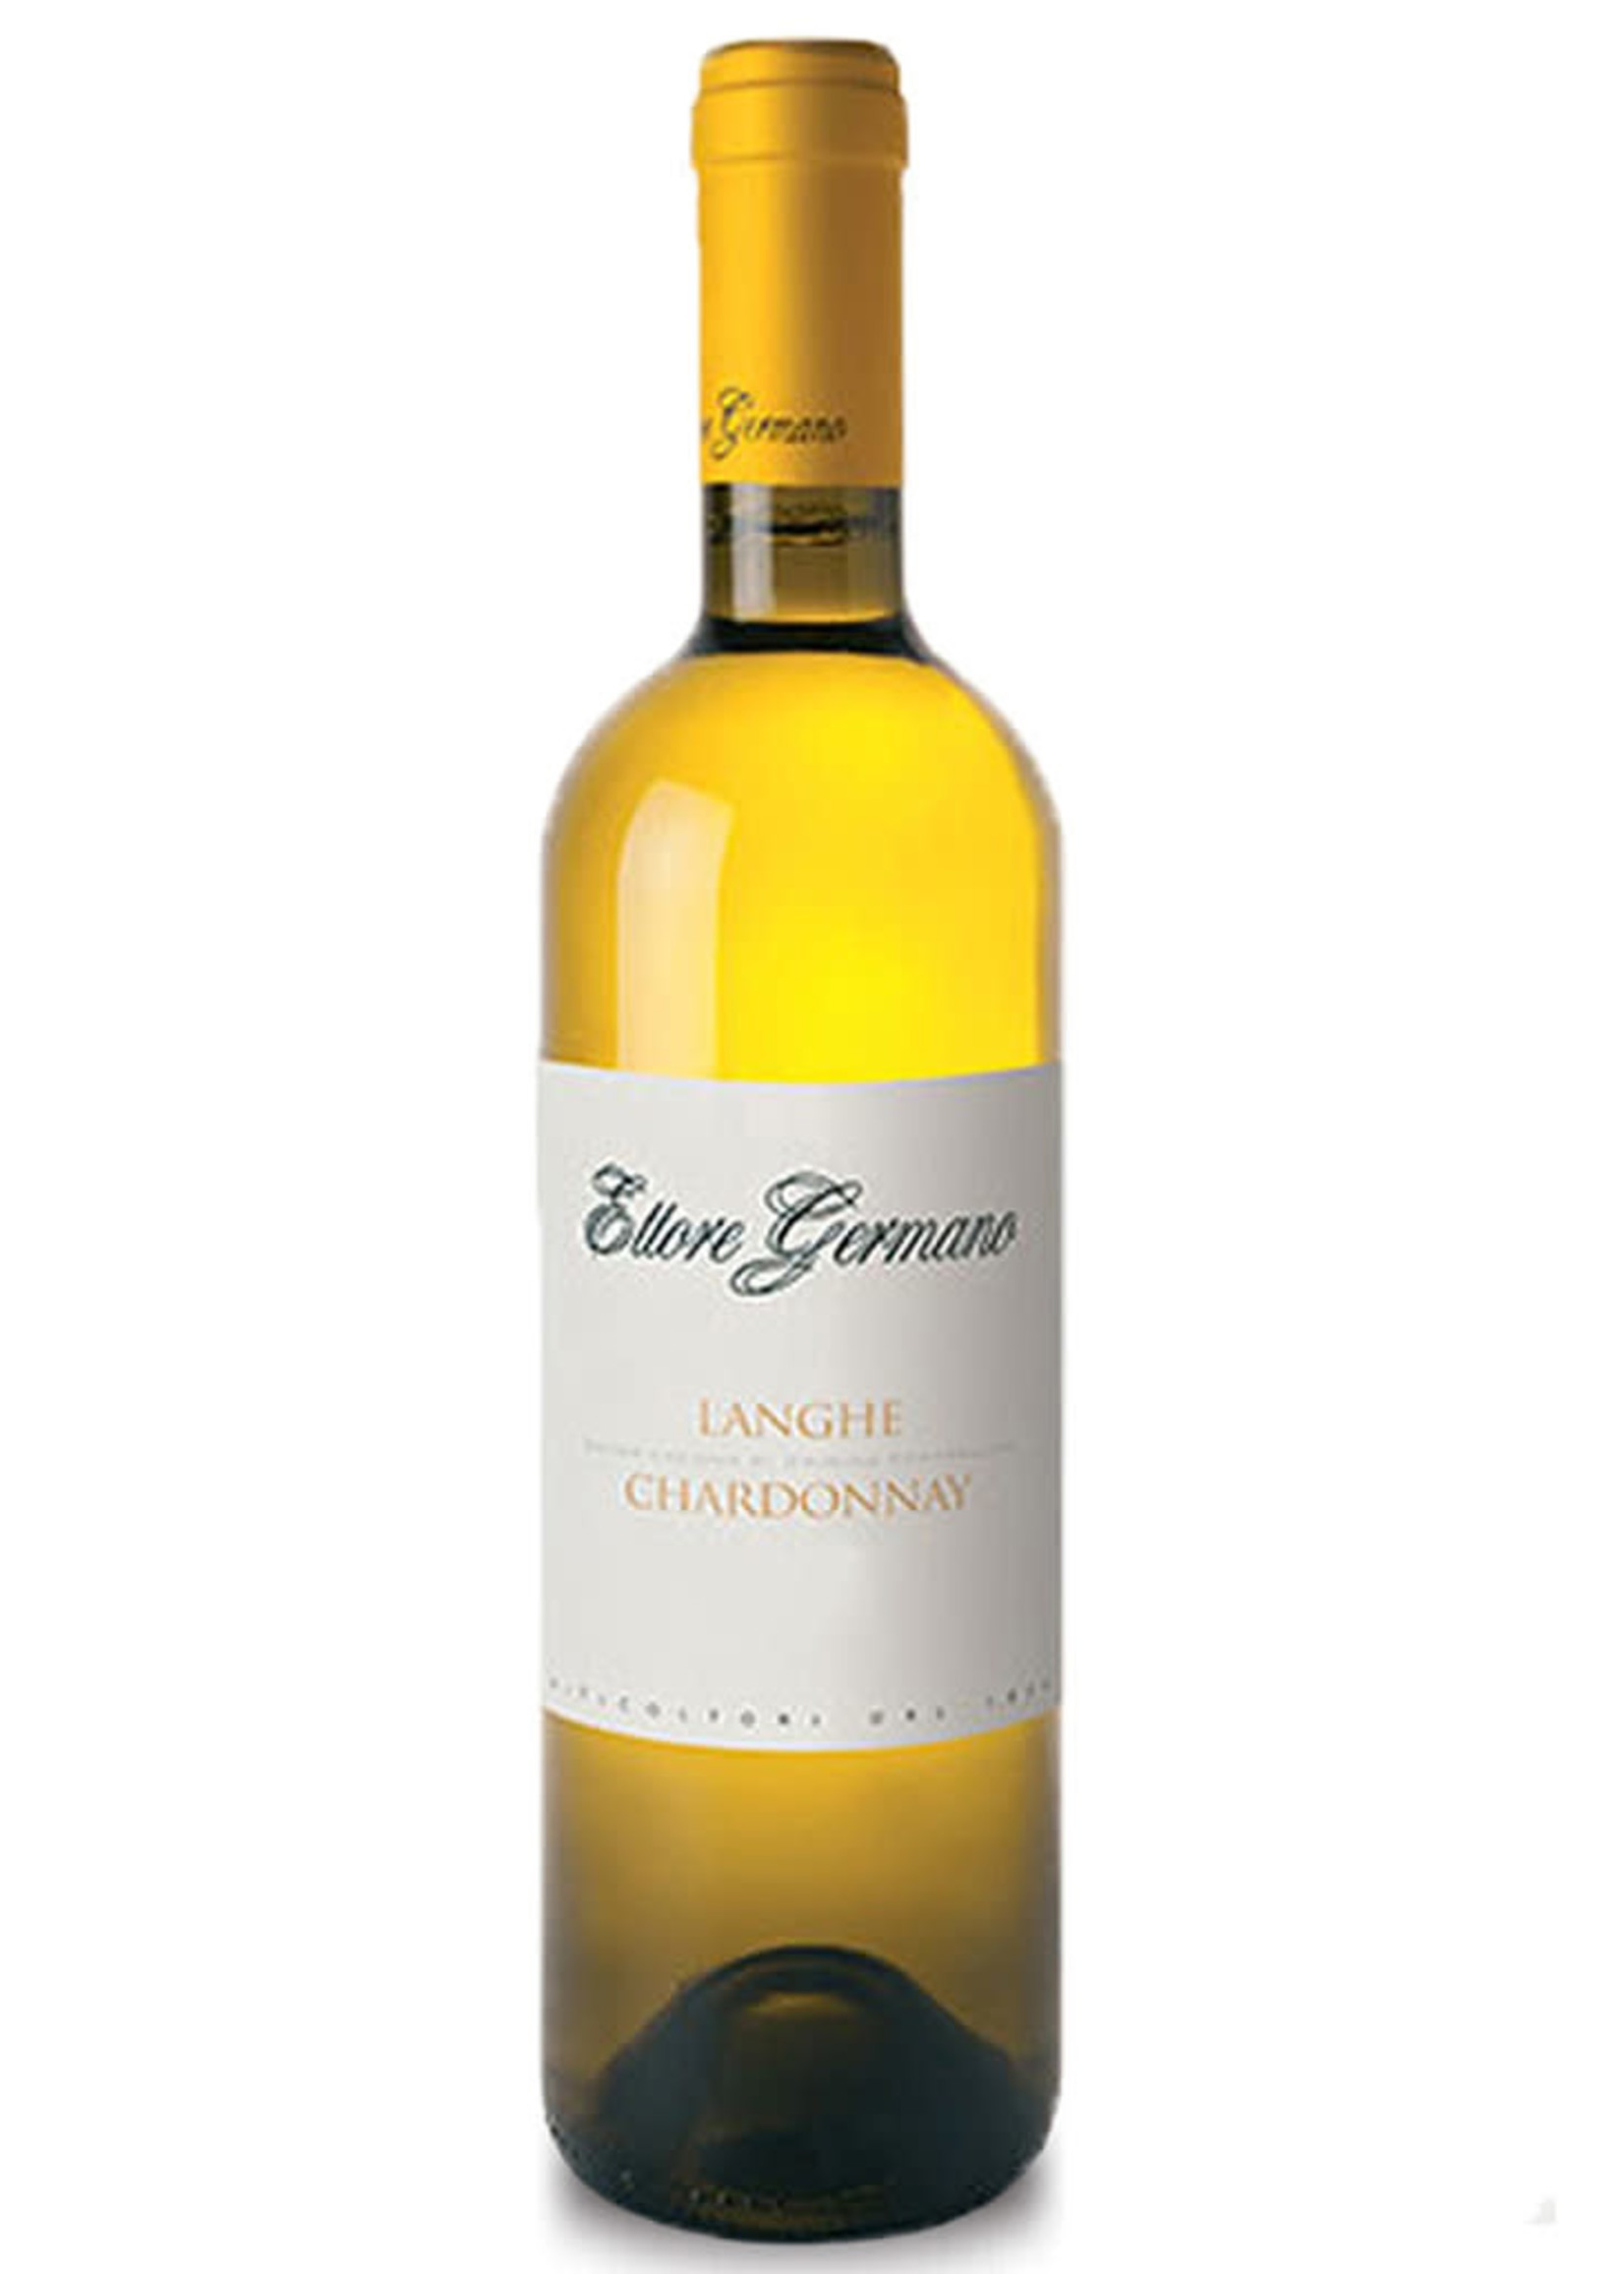 Ettore Germano 2019 Serralunga Langhe Chardonnay, Piedmont, Italy